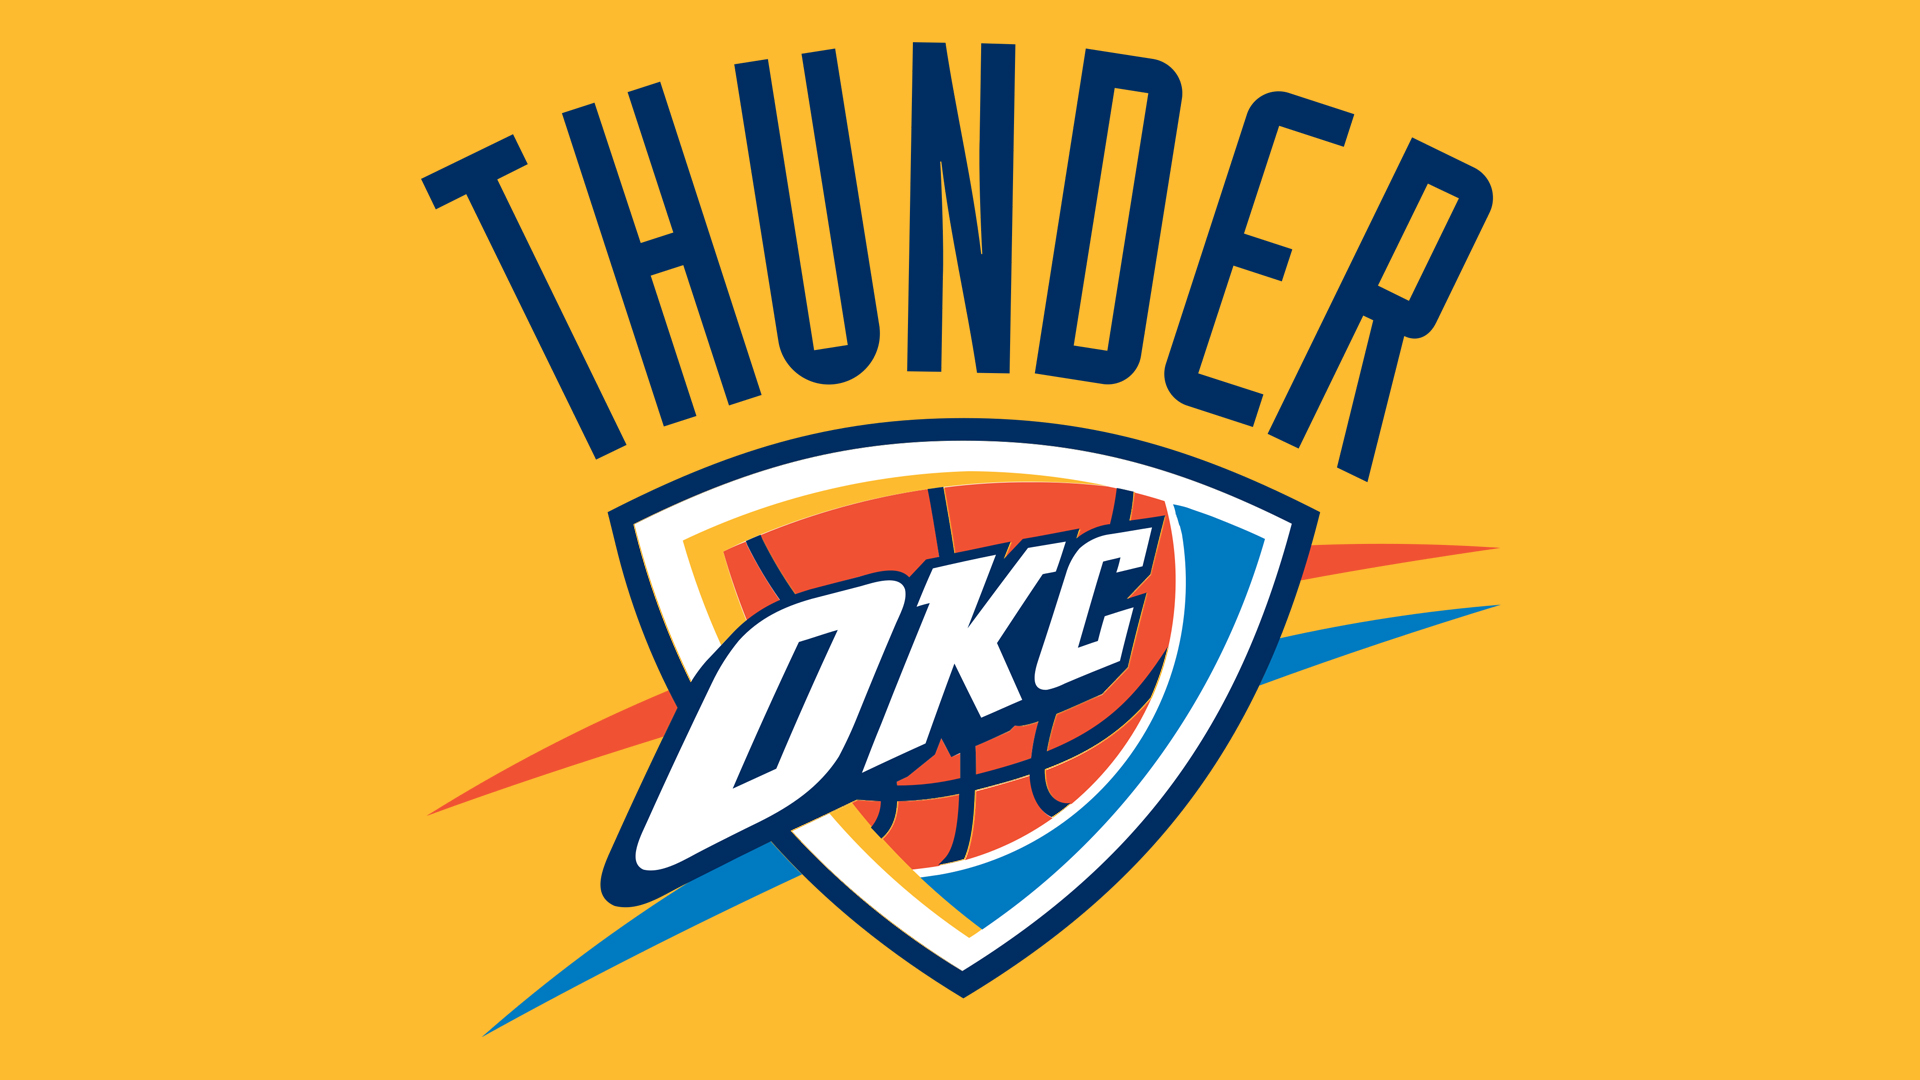 Скачать обои бесплатно Баскетбол, Нба, Виды Спорта, Лого, Оклахома Сити Тандер картинка на рабочий стол ПК